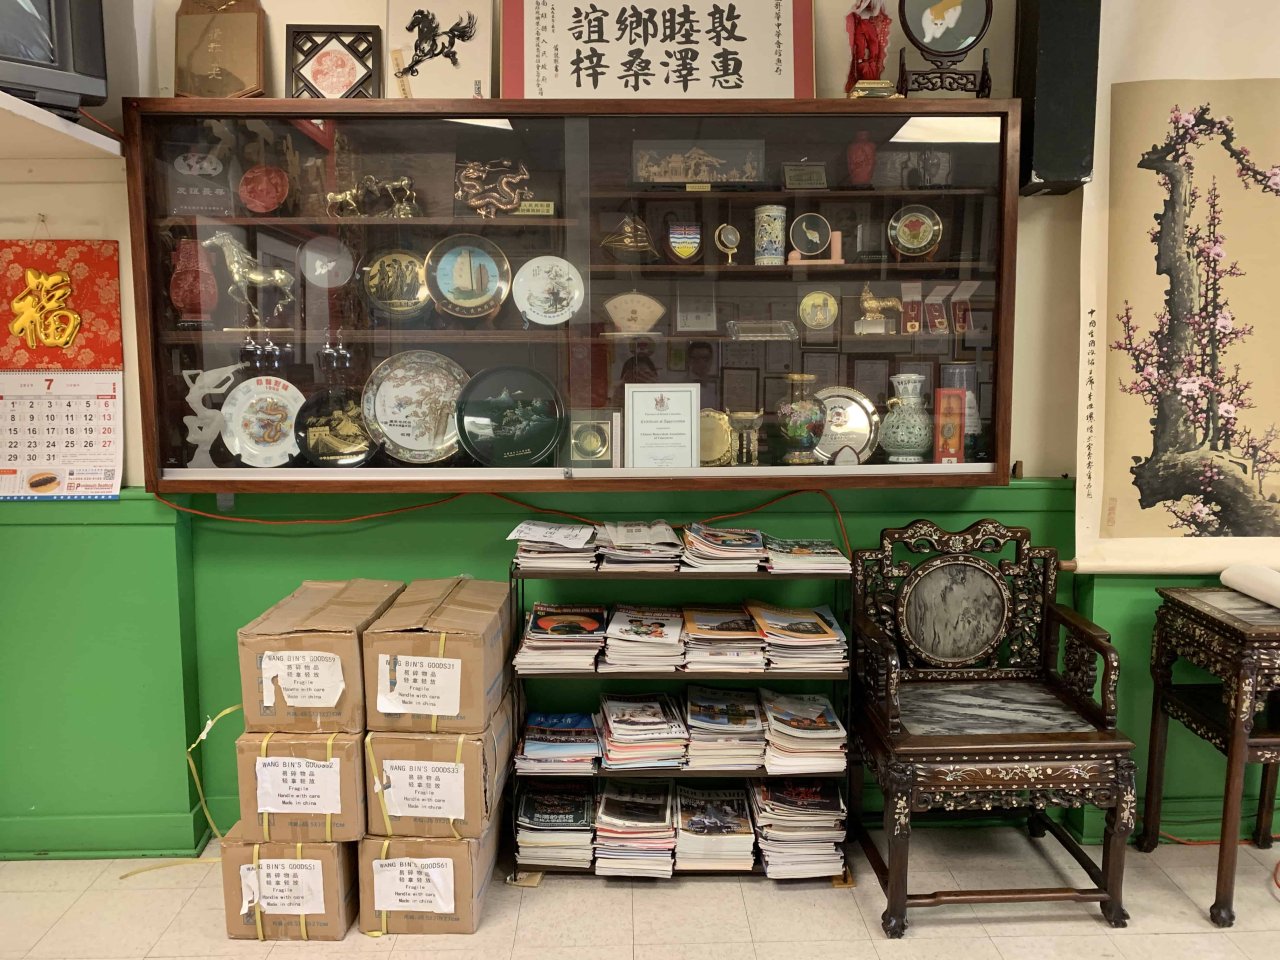 Shelves at Chinese Benevolent Association. Photo Credit: Yahe Li